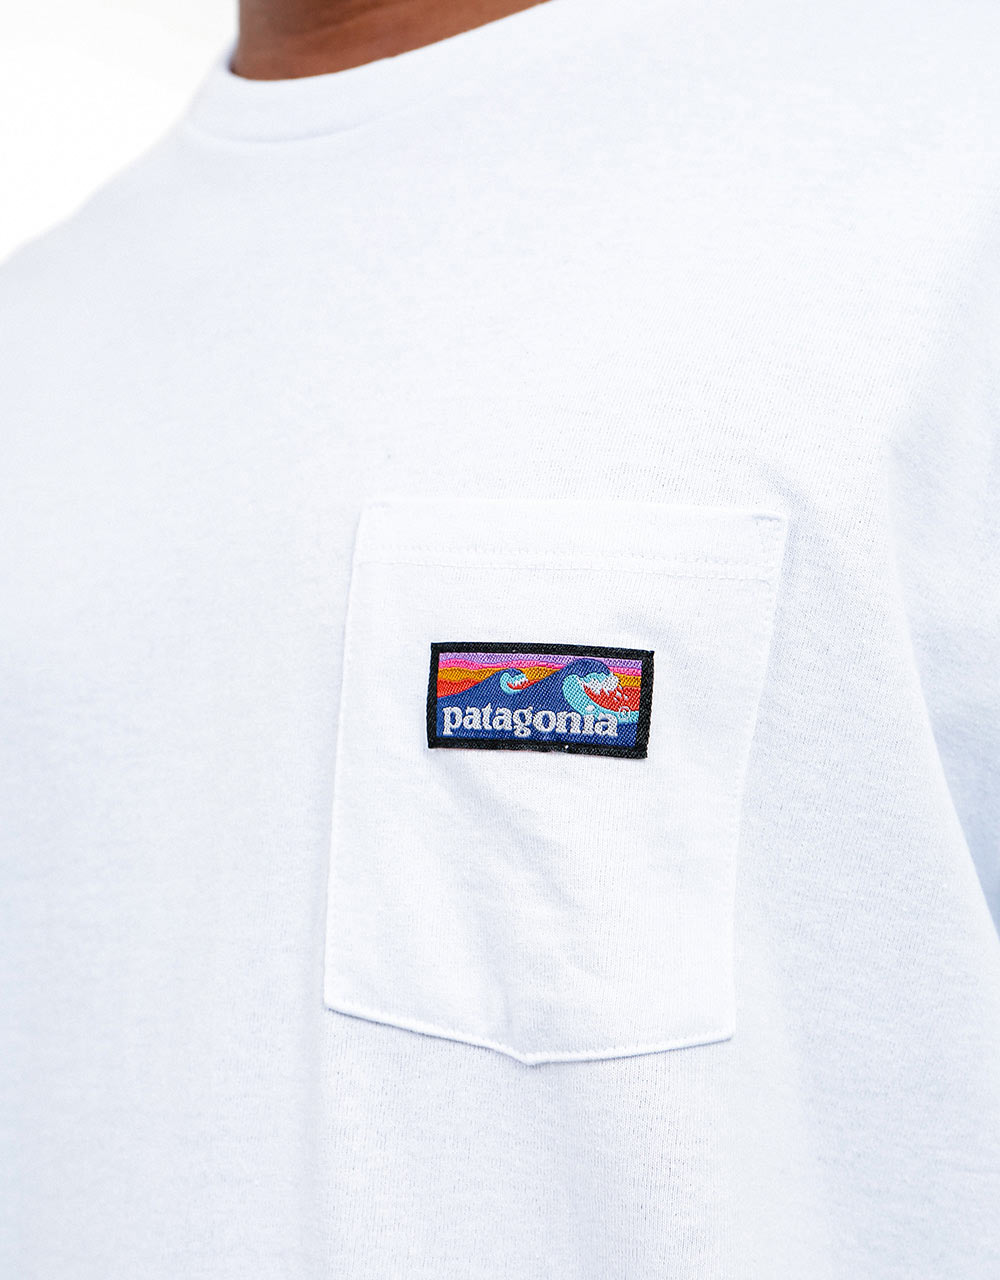 Patagonia Boardshort Label Pocket Responsibili-Tee® - White